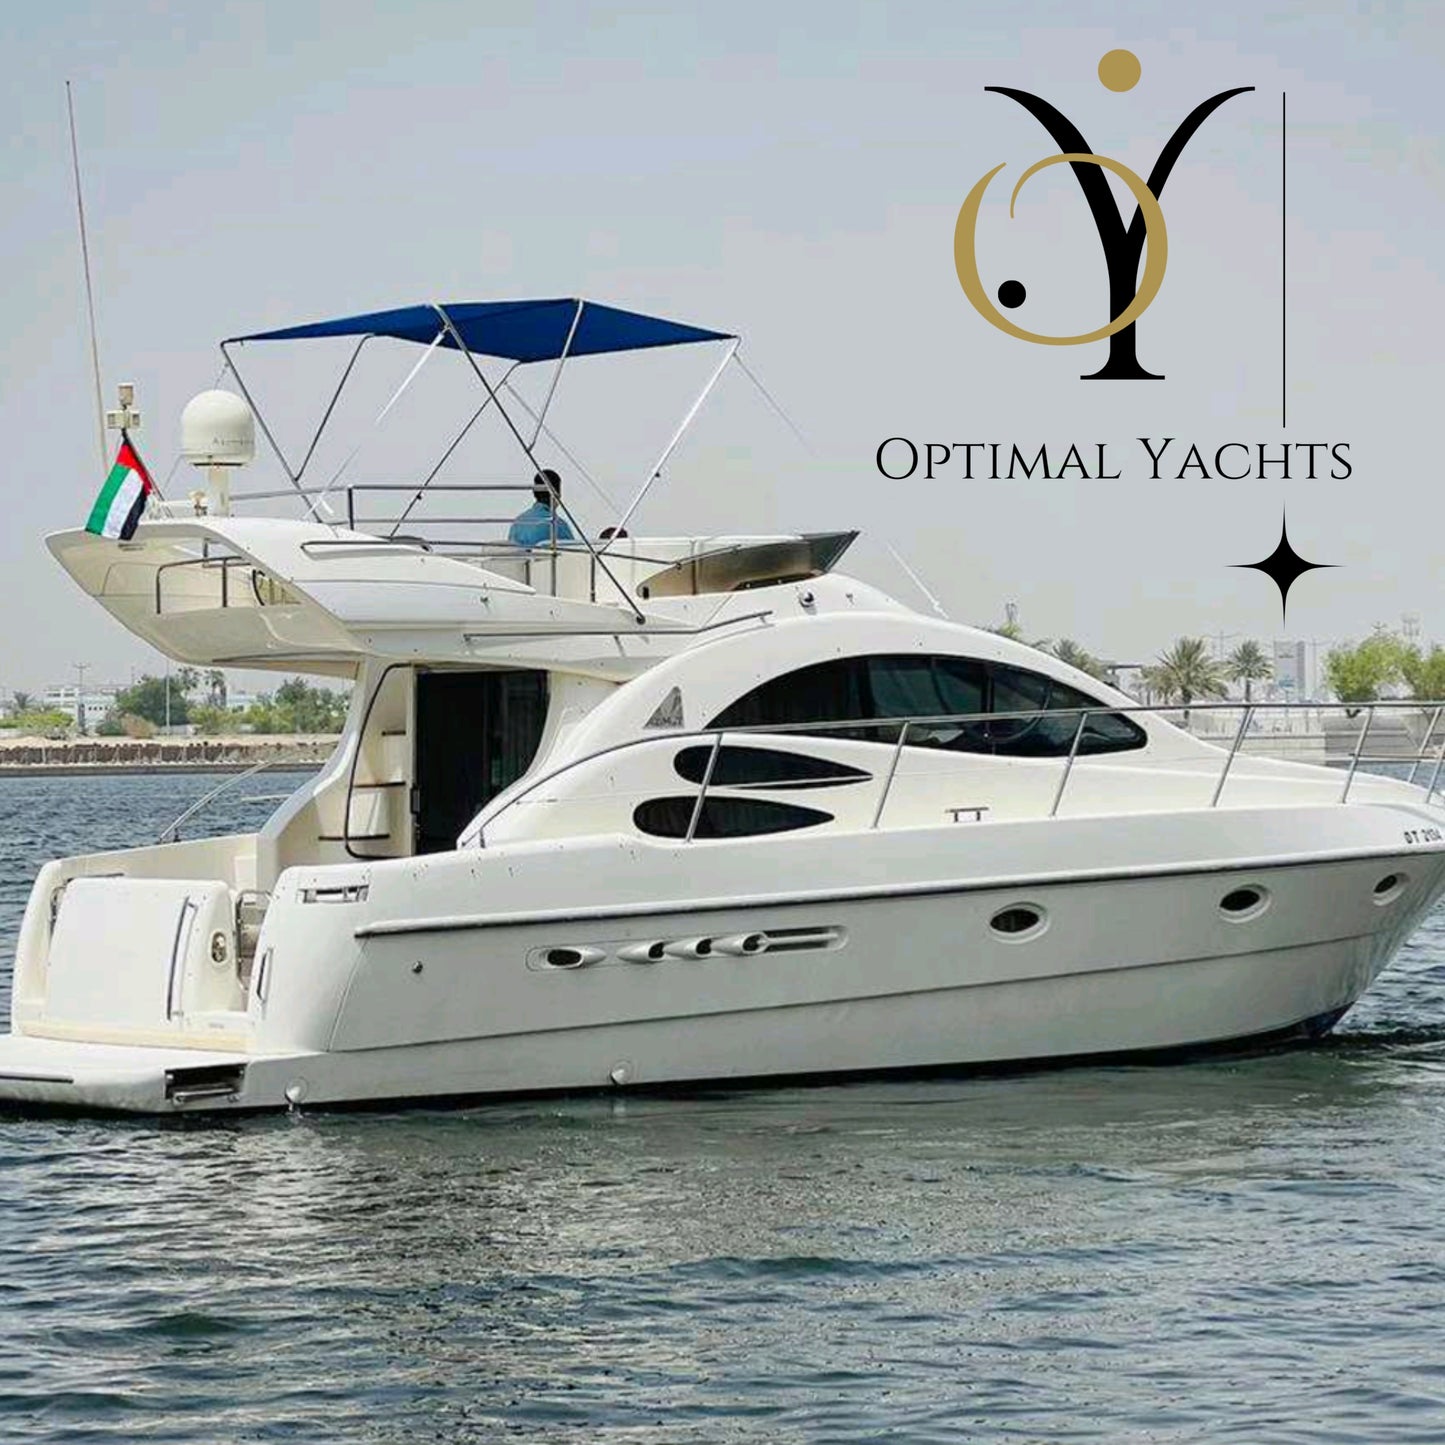 42ft Fly Bridge Yacht - Dubai Marina Cruise / Dubai Harbour Charter Palm Jumeirah/ 10pax. 𝕋𝕙𝕖 𝕐𝕒𝕔𝕙𝕥 𝔾𝕦𝕪 𝔻𝕦𝕓𝕒𝕚